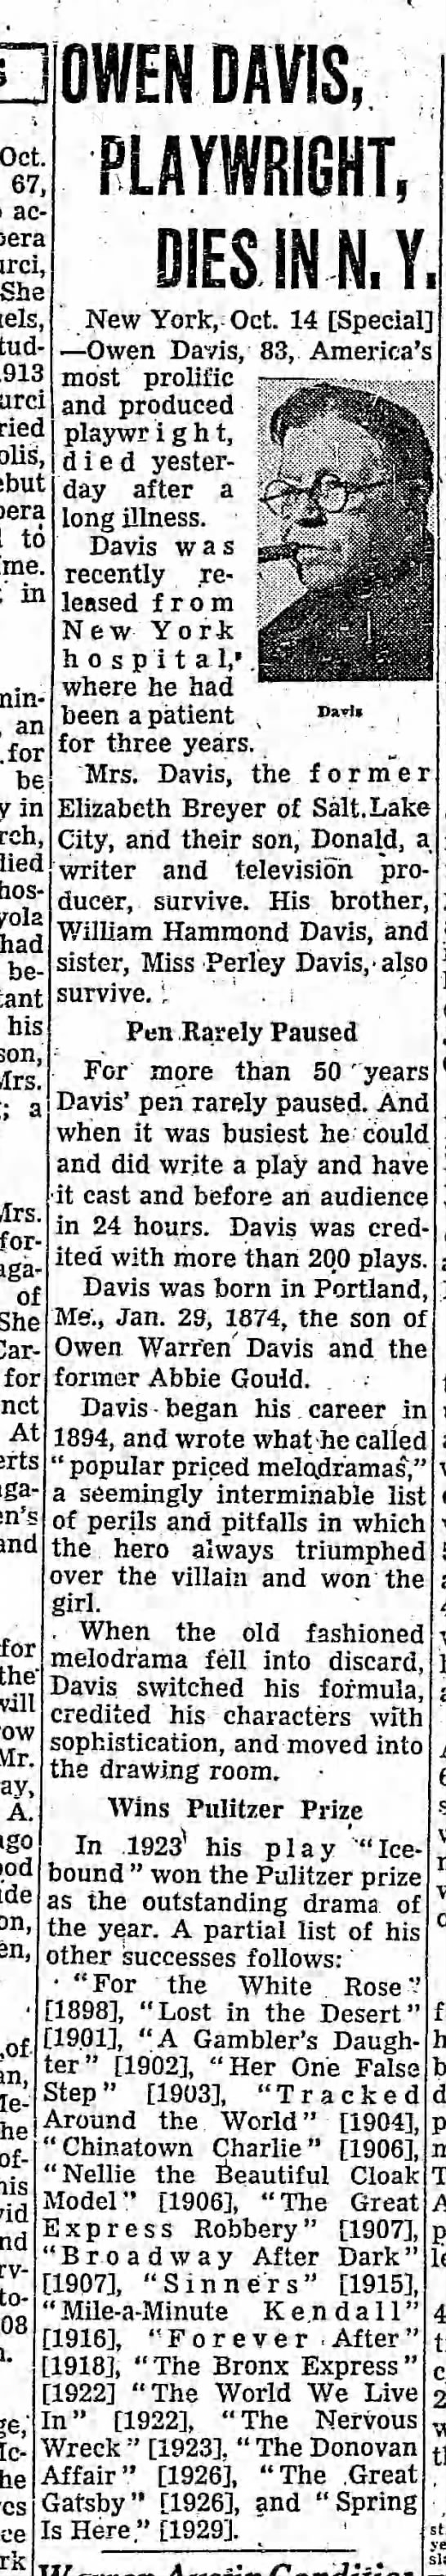 Owen Davis - 